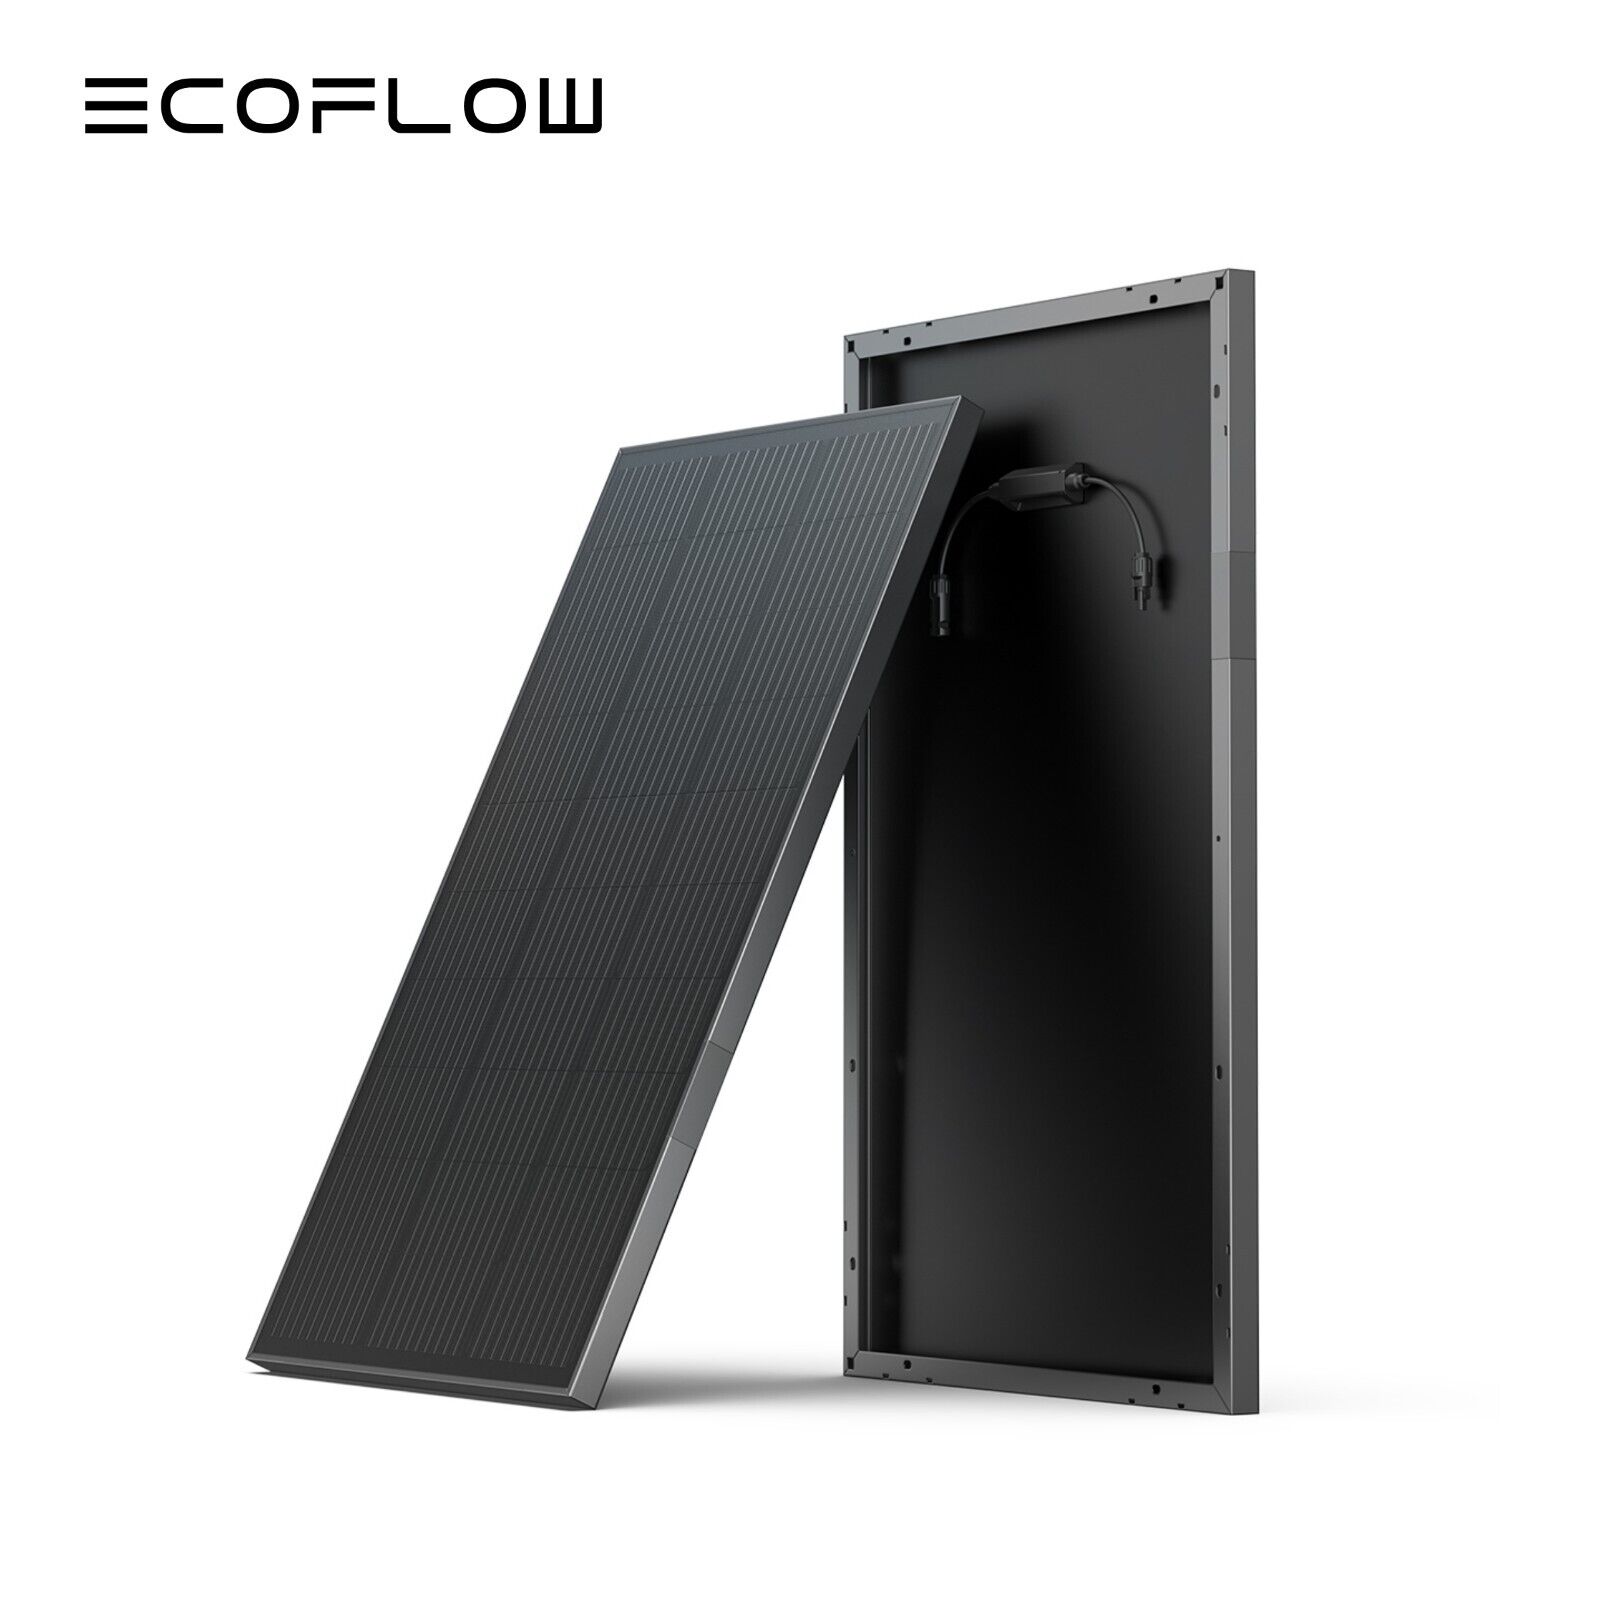 EcoFlow 2PCS 100W Rigid Solar Panel with IP68, High Efficiency Solar Modules